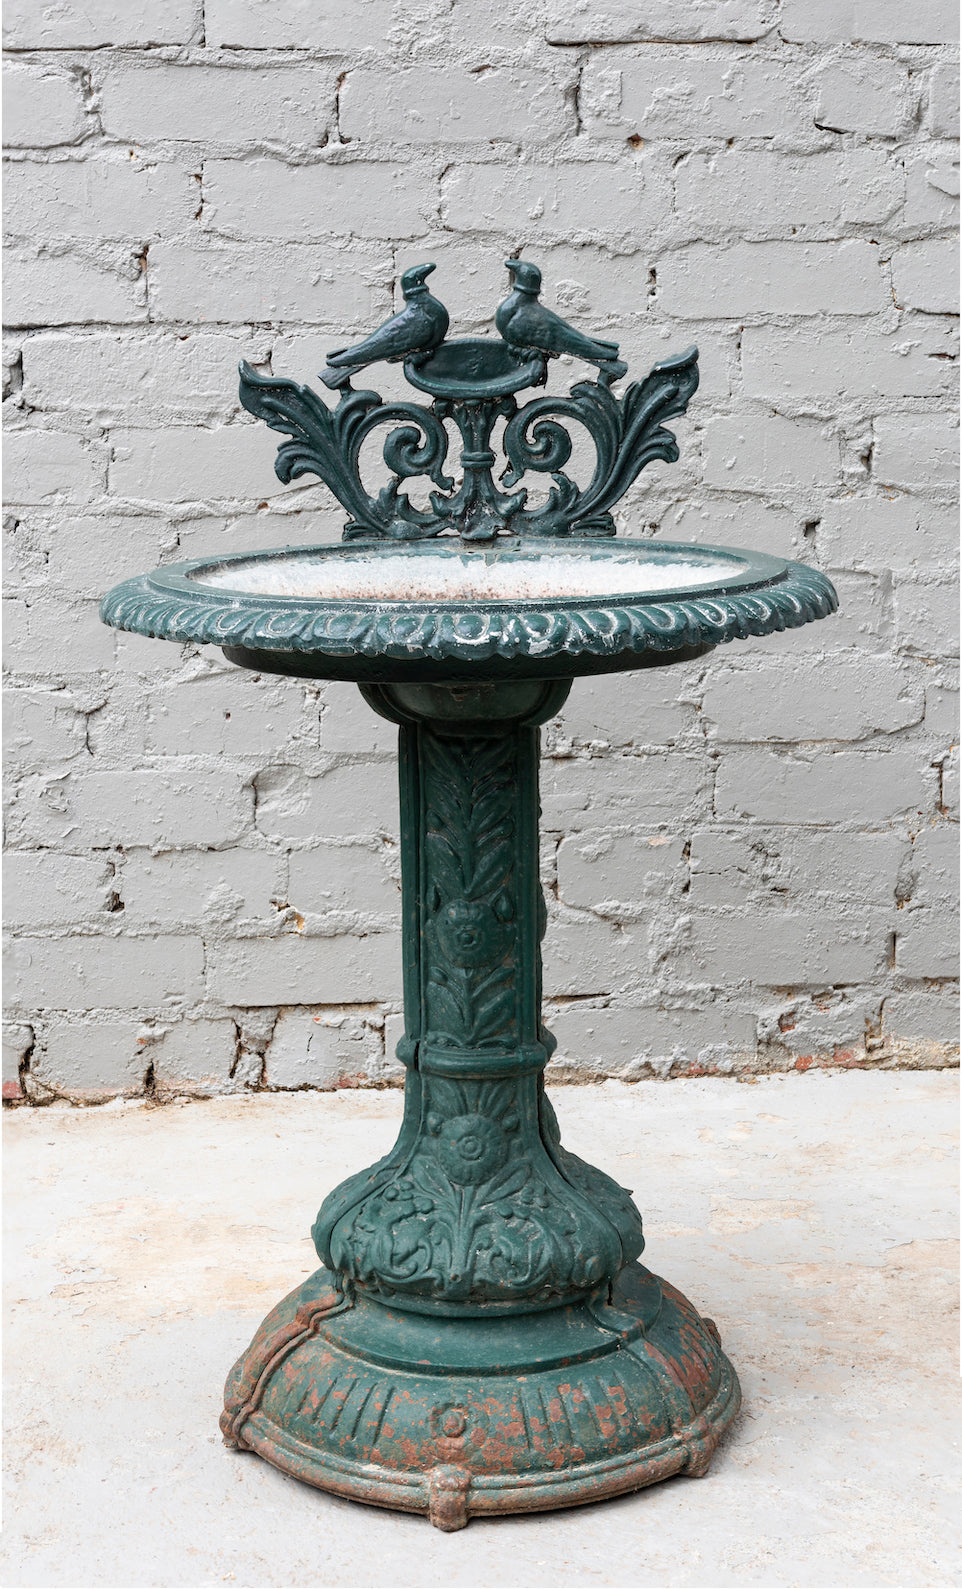 SOLD A vintage green painted cast iron pedestal bird bath